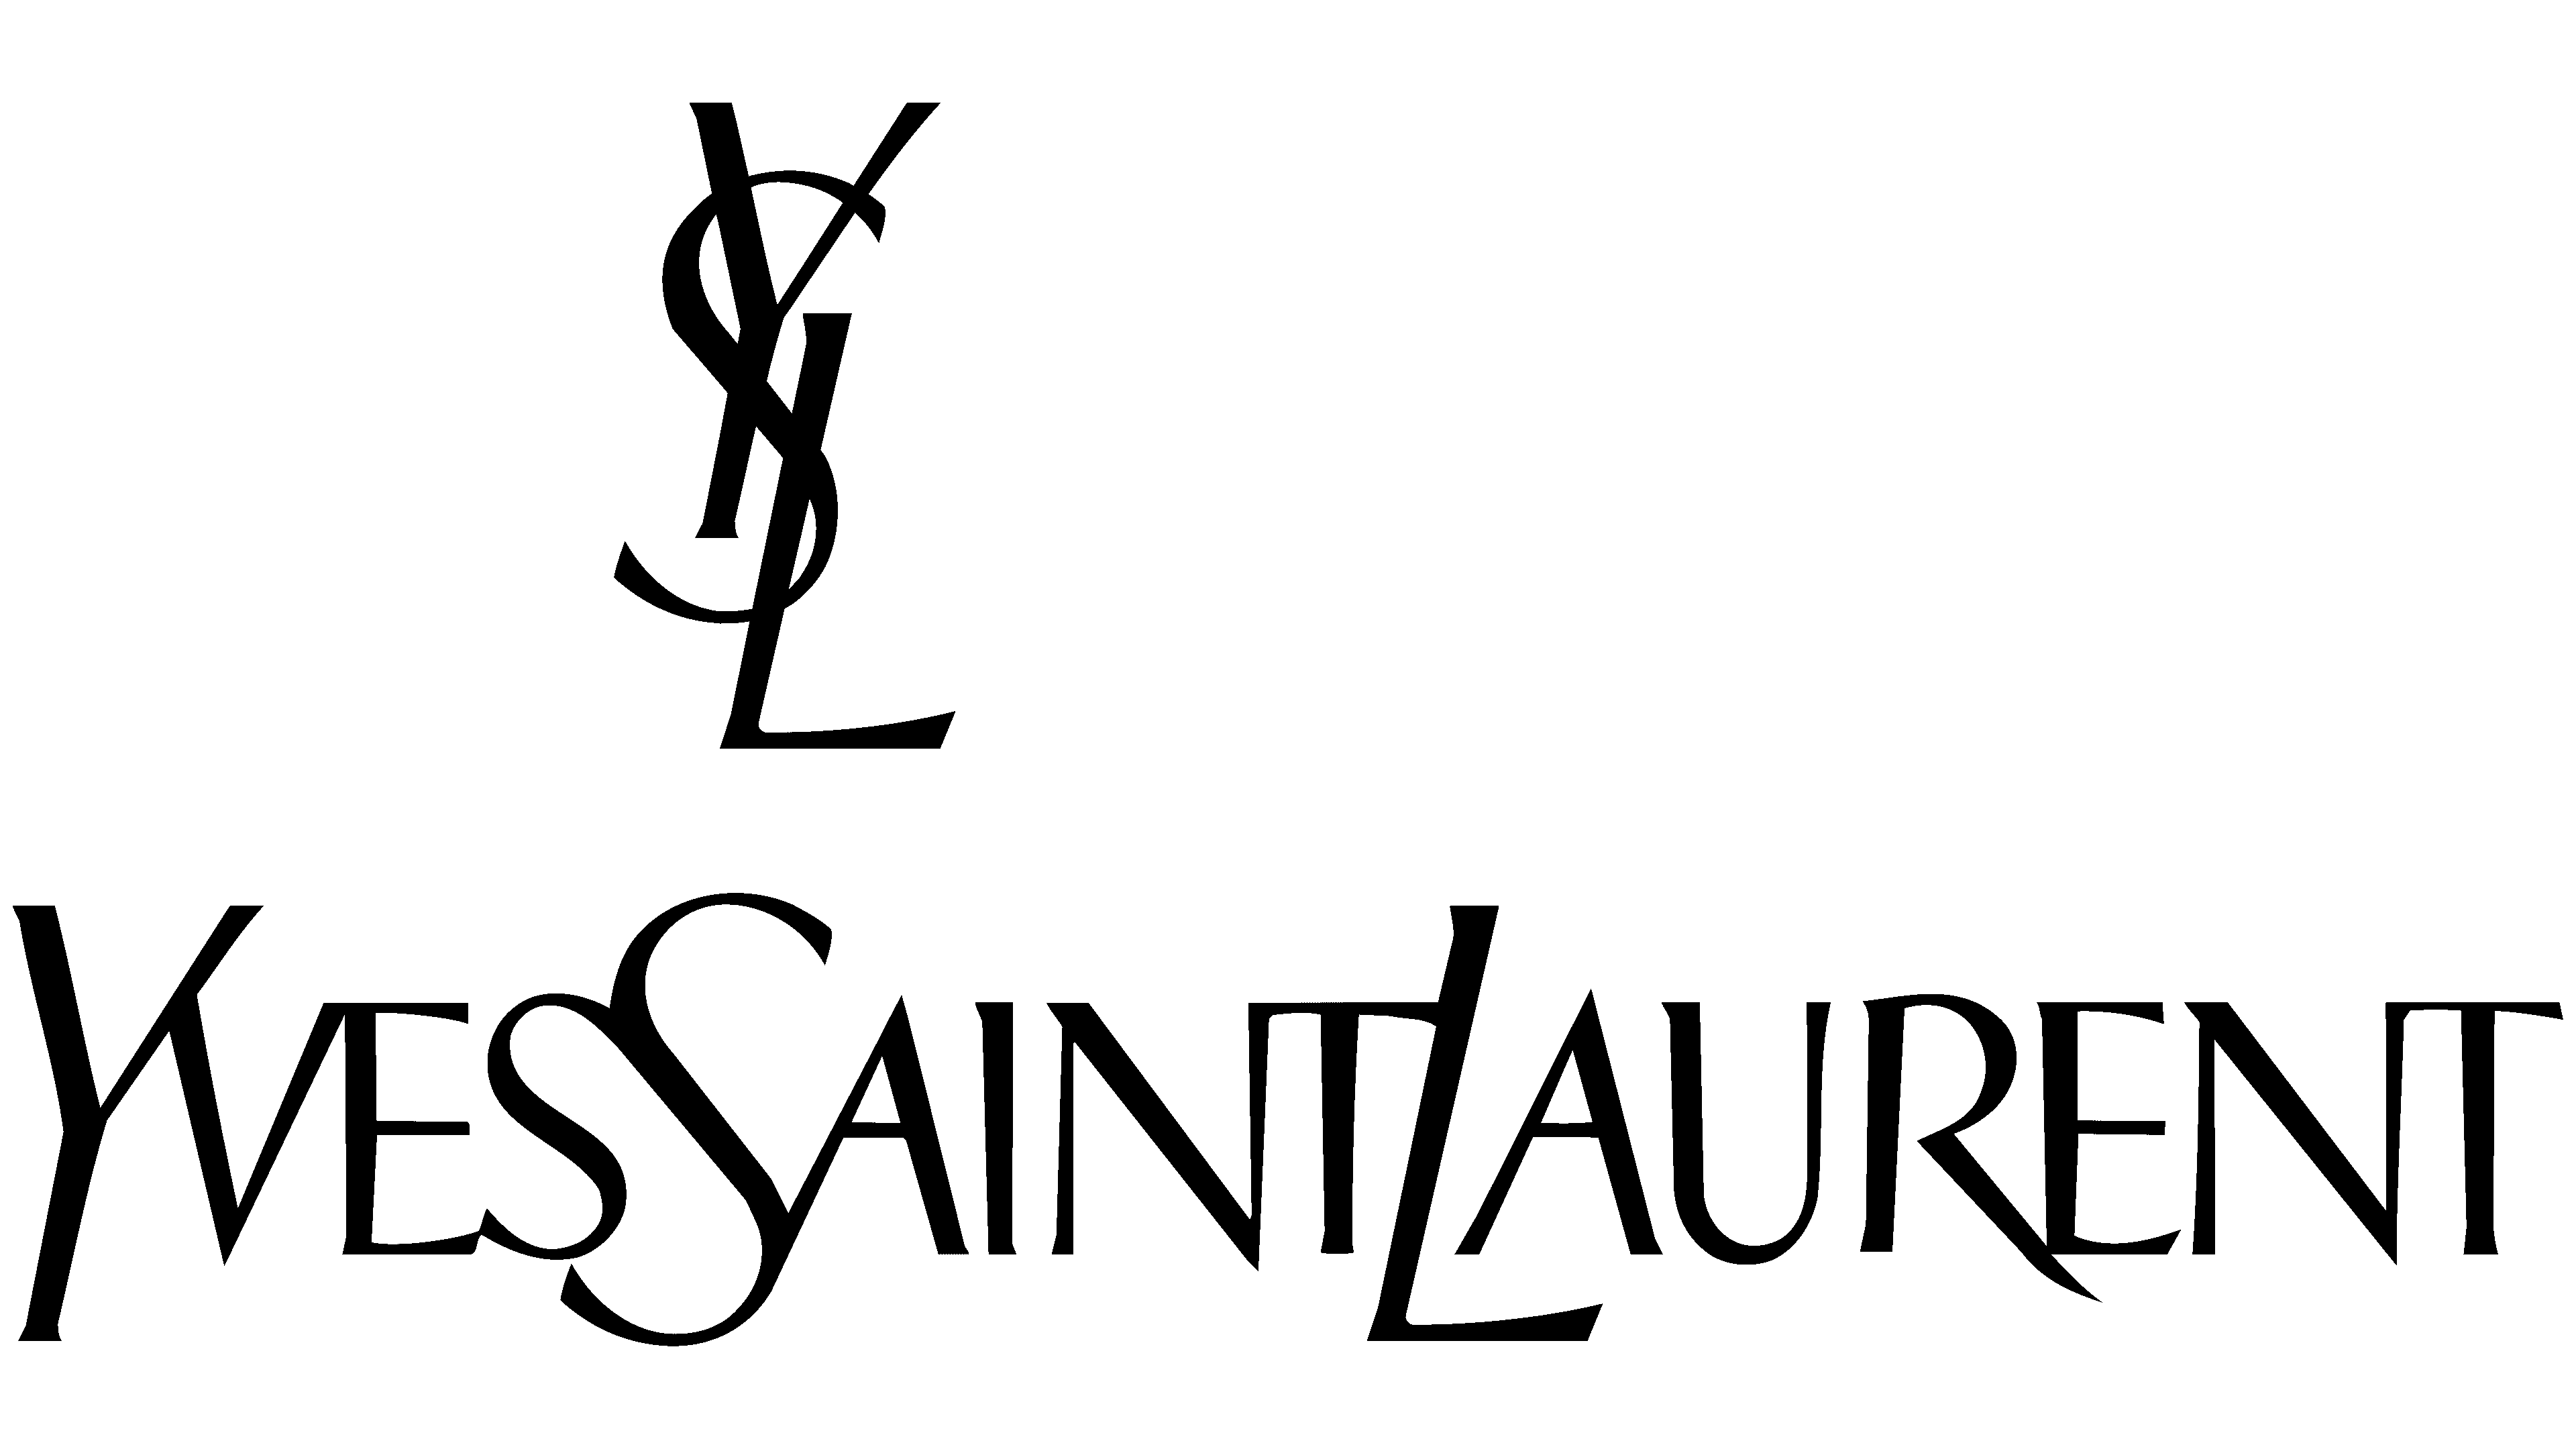 Saint Laurent Logo And Symbol, Meaning, History, PNG, Brand | vlr.eng.br